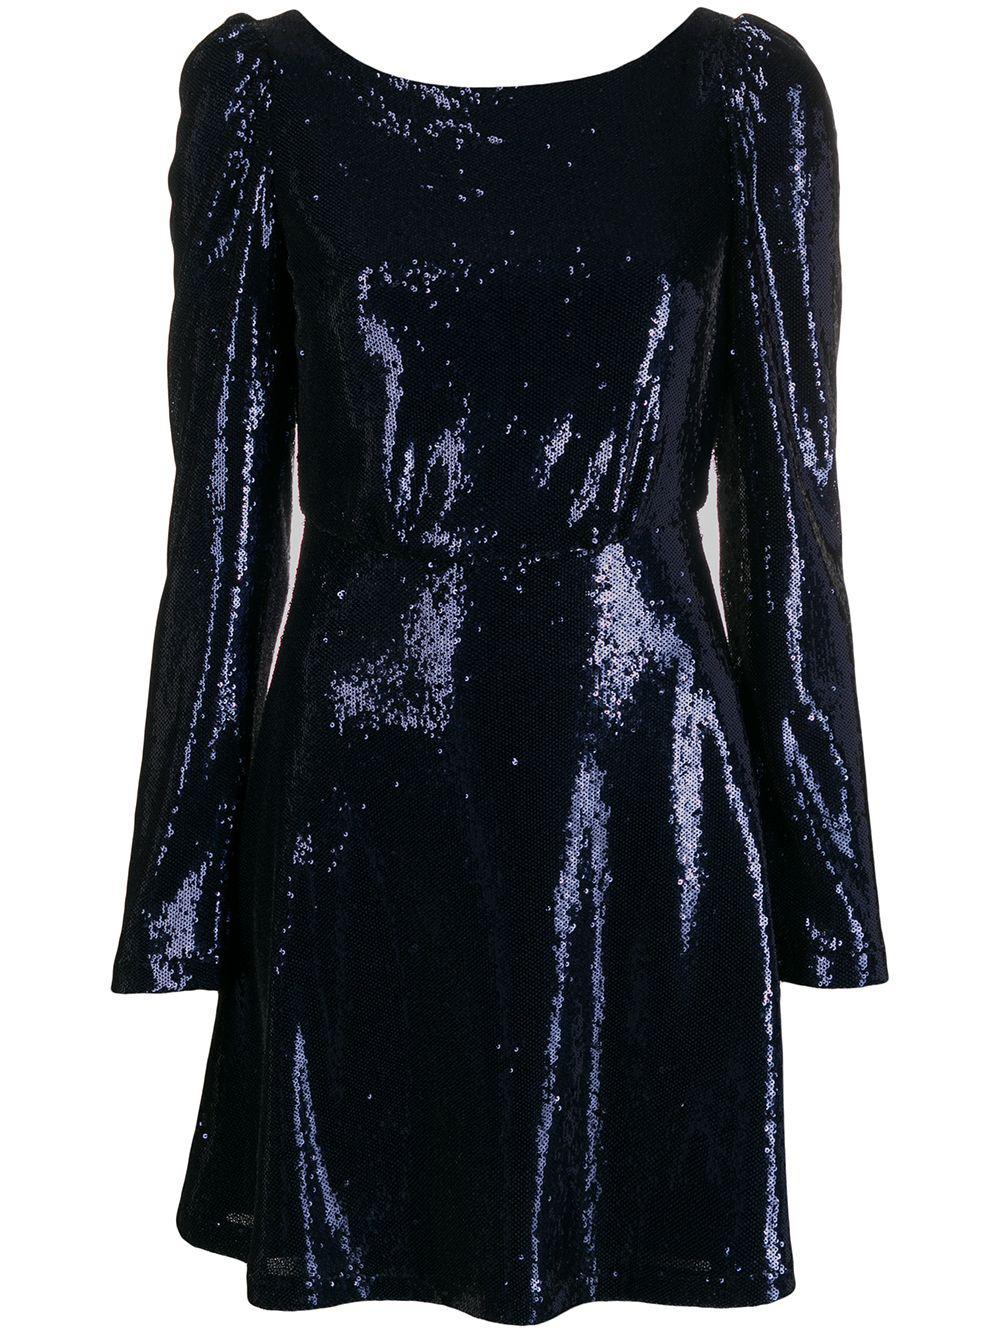 sequin-embellished mini dress by BLACK CORAL